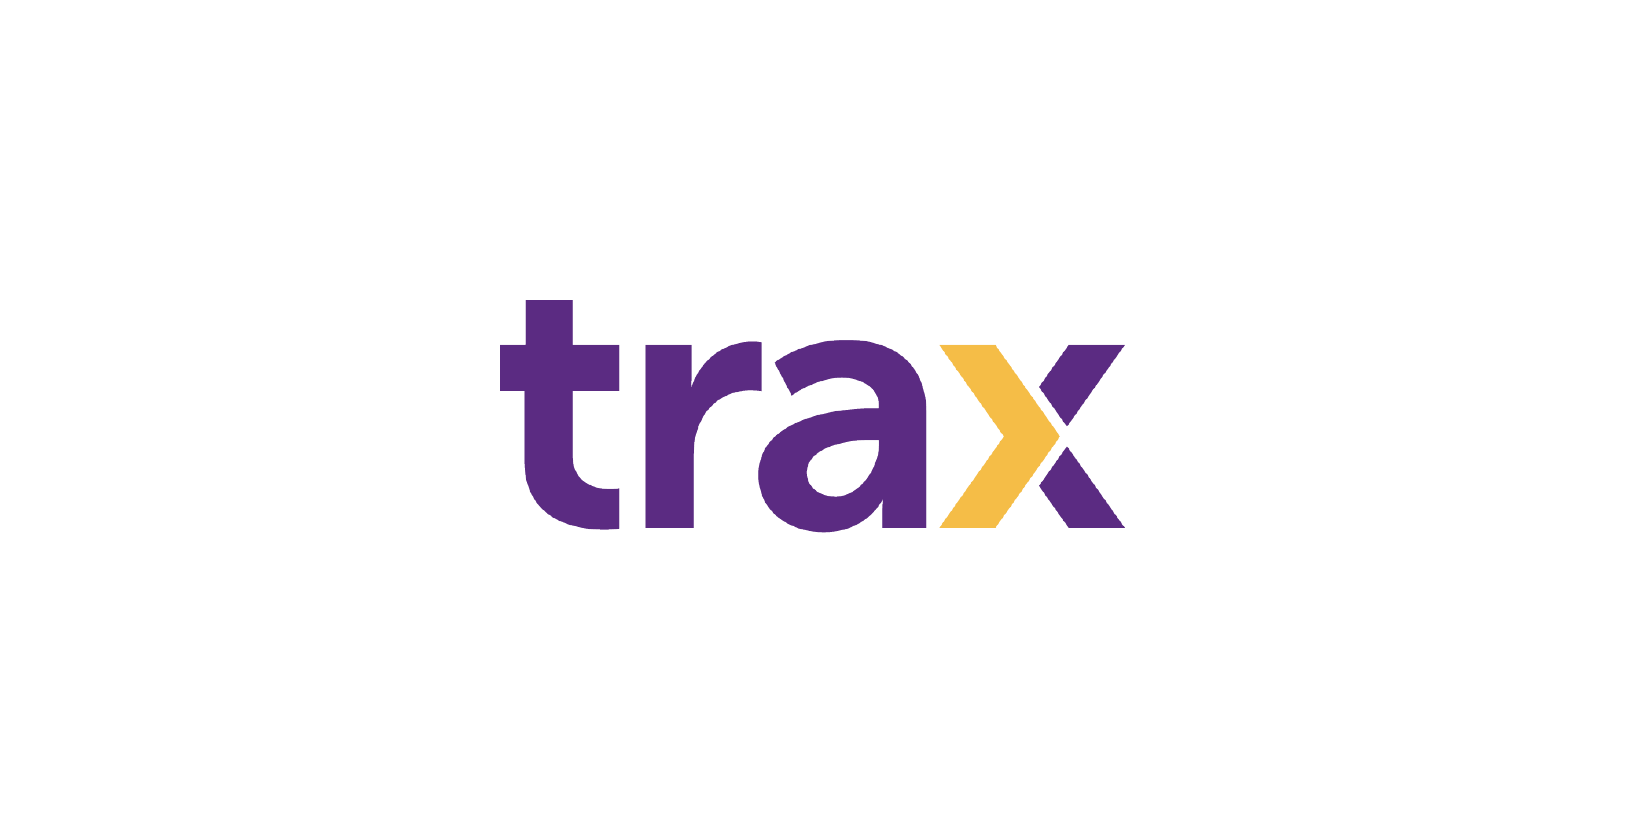 Vision Fund investment portfolio company Trax's logo